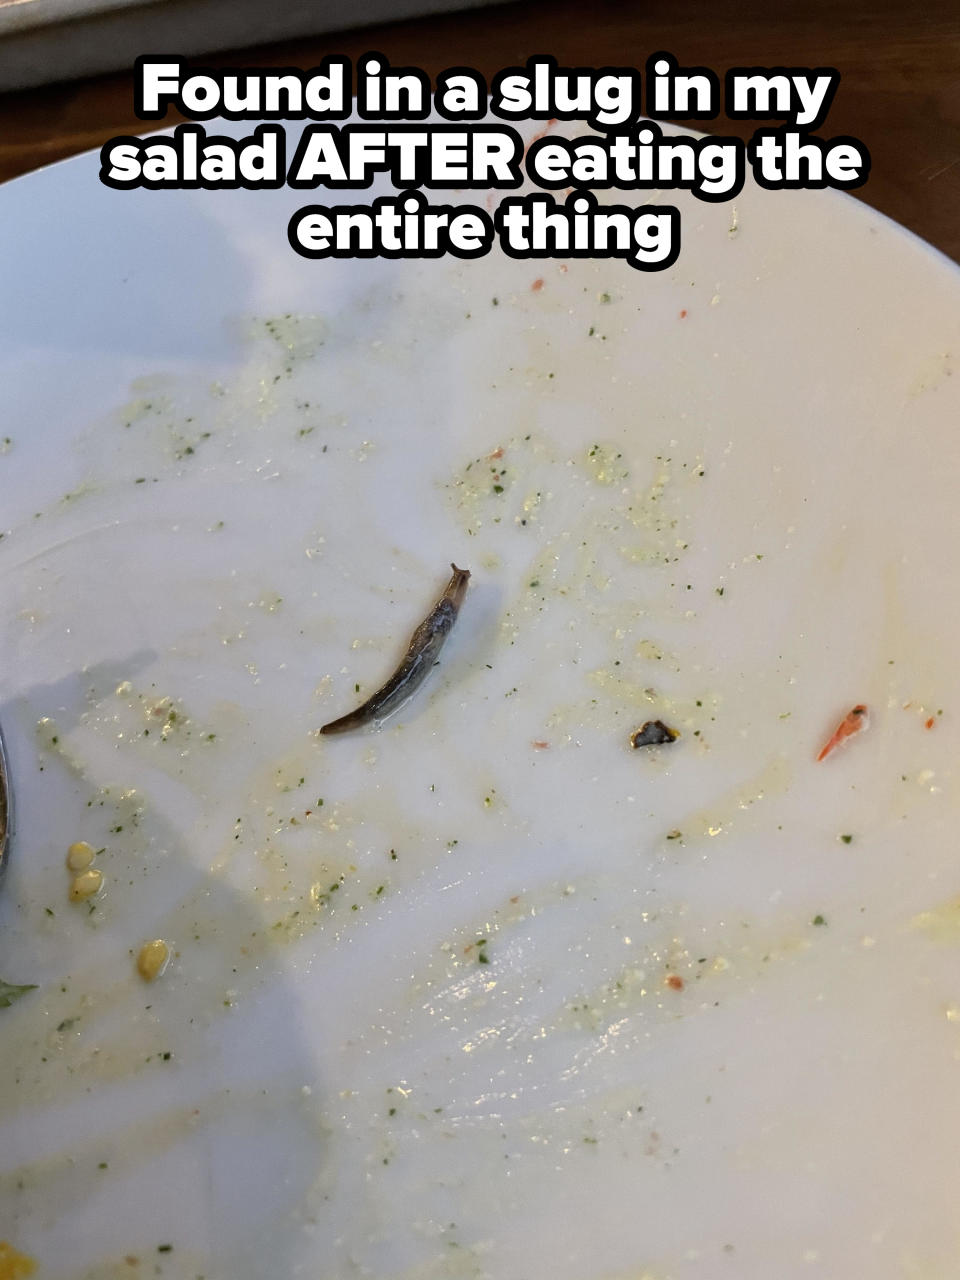 A slug on someone's empty plate